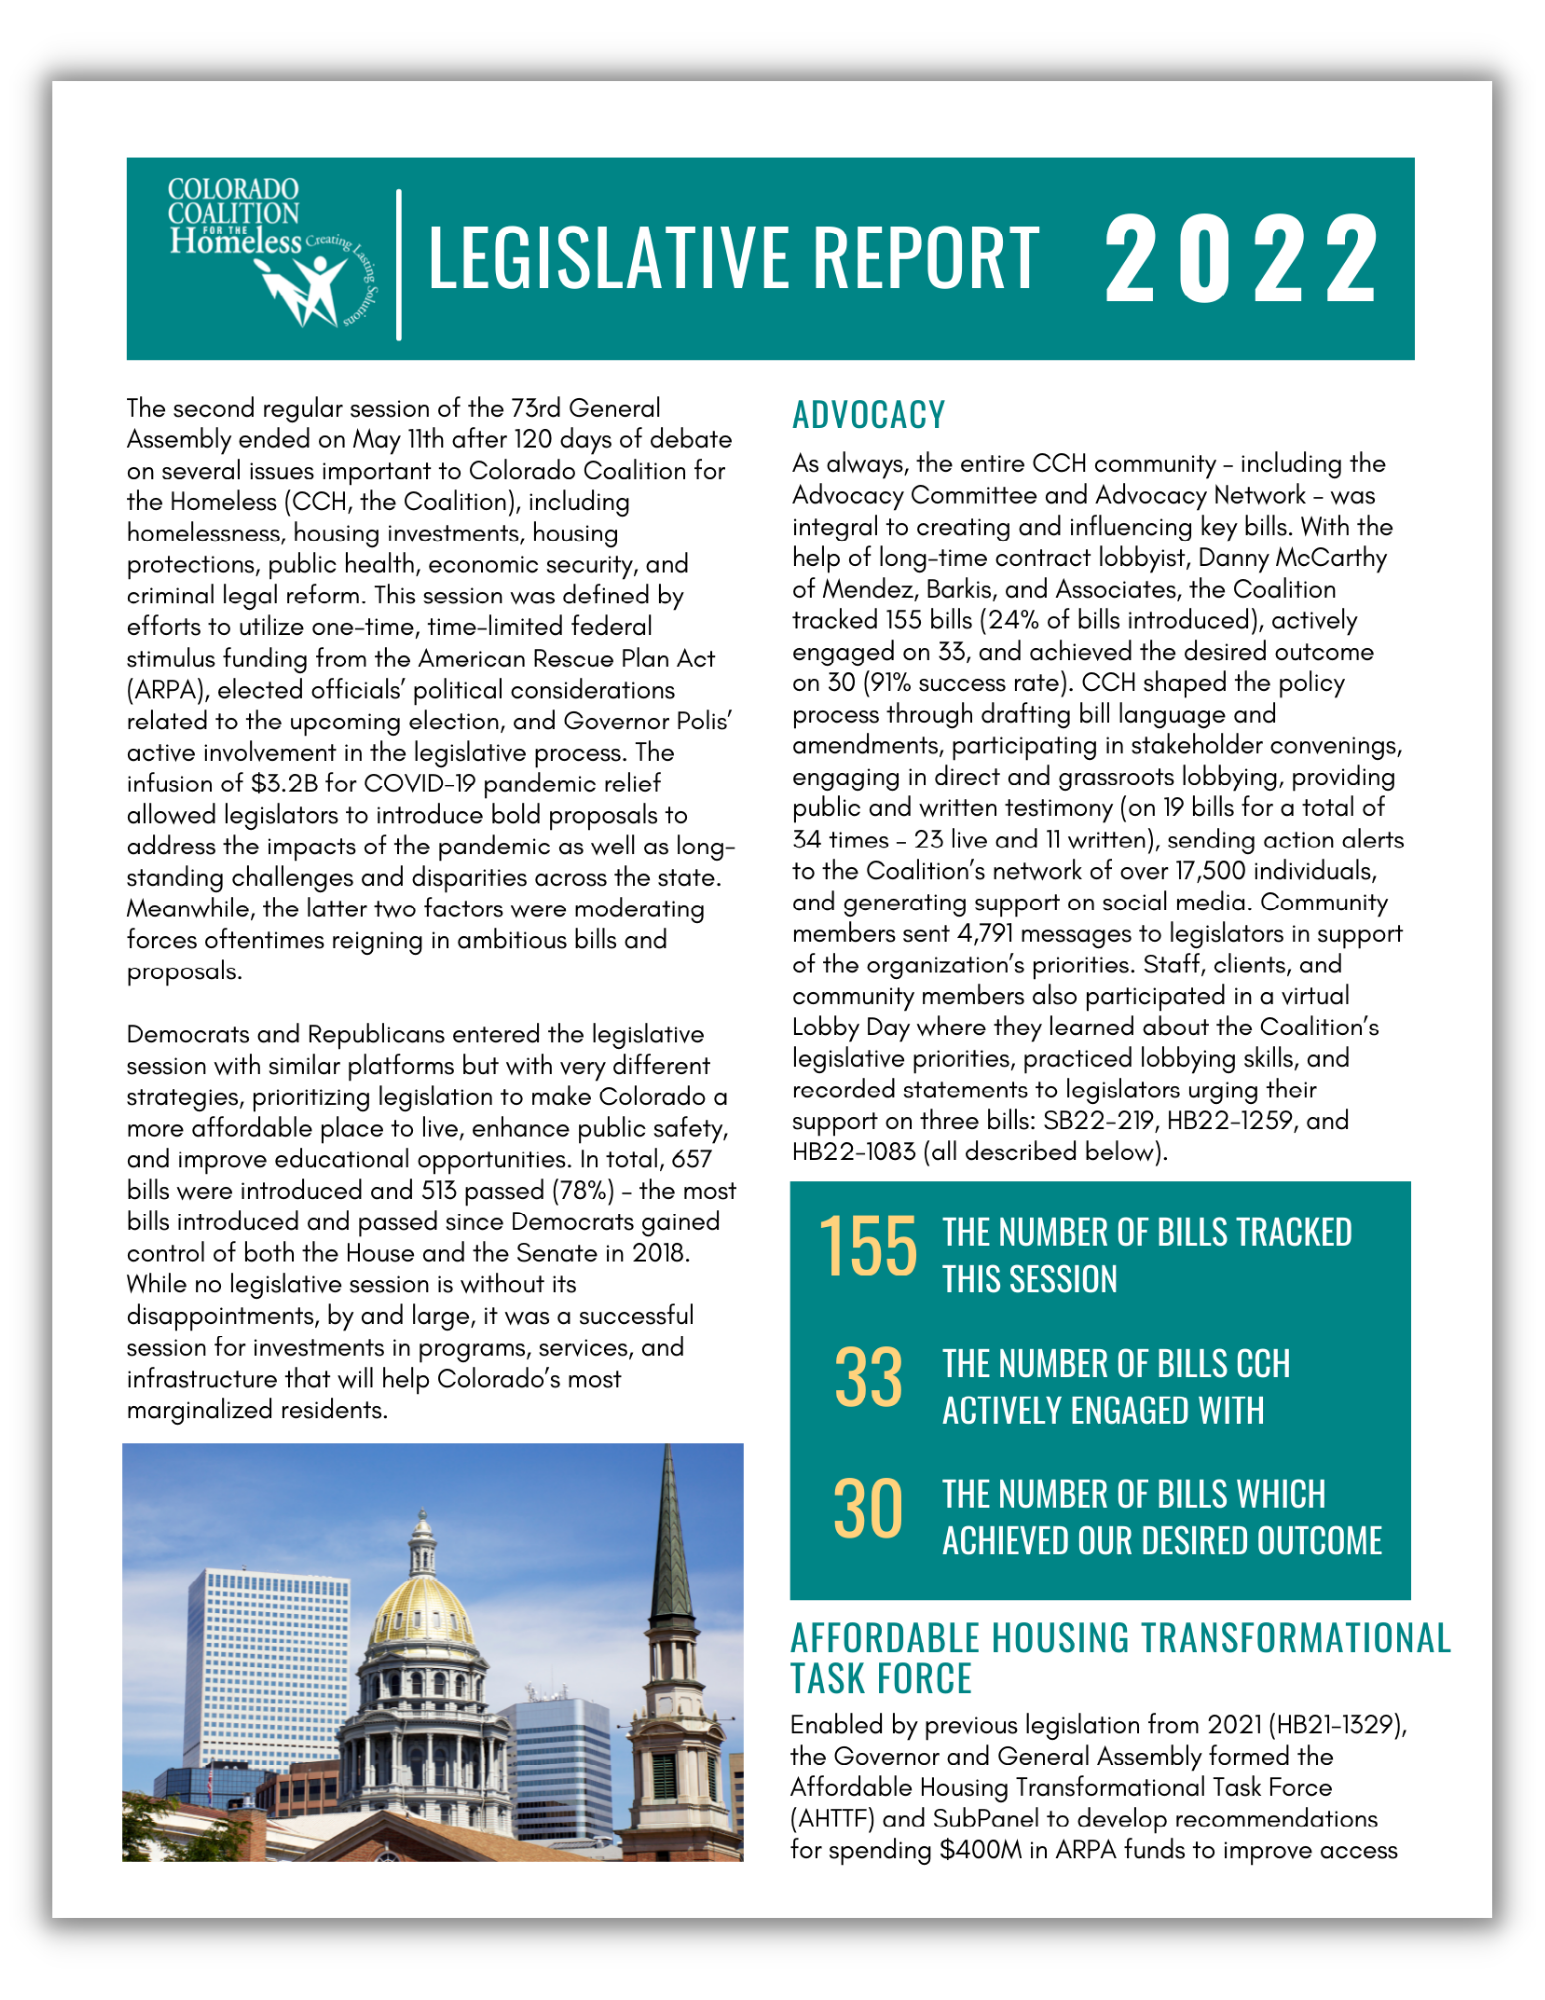 2022 Legislative Report Image